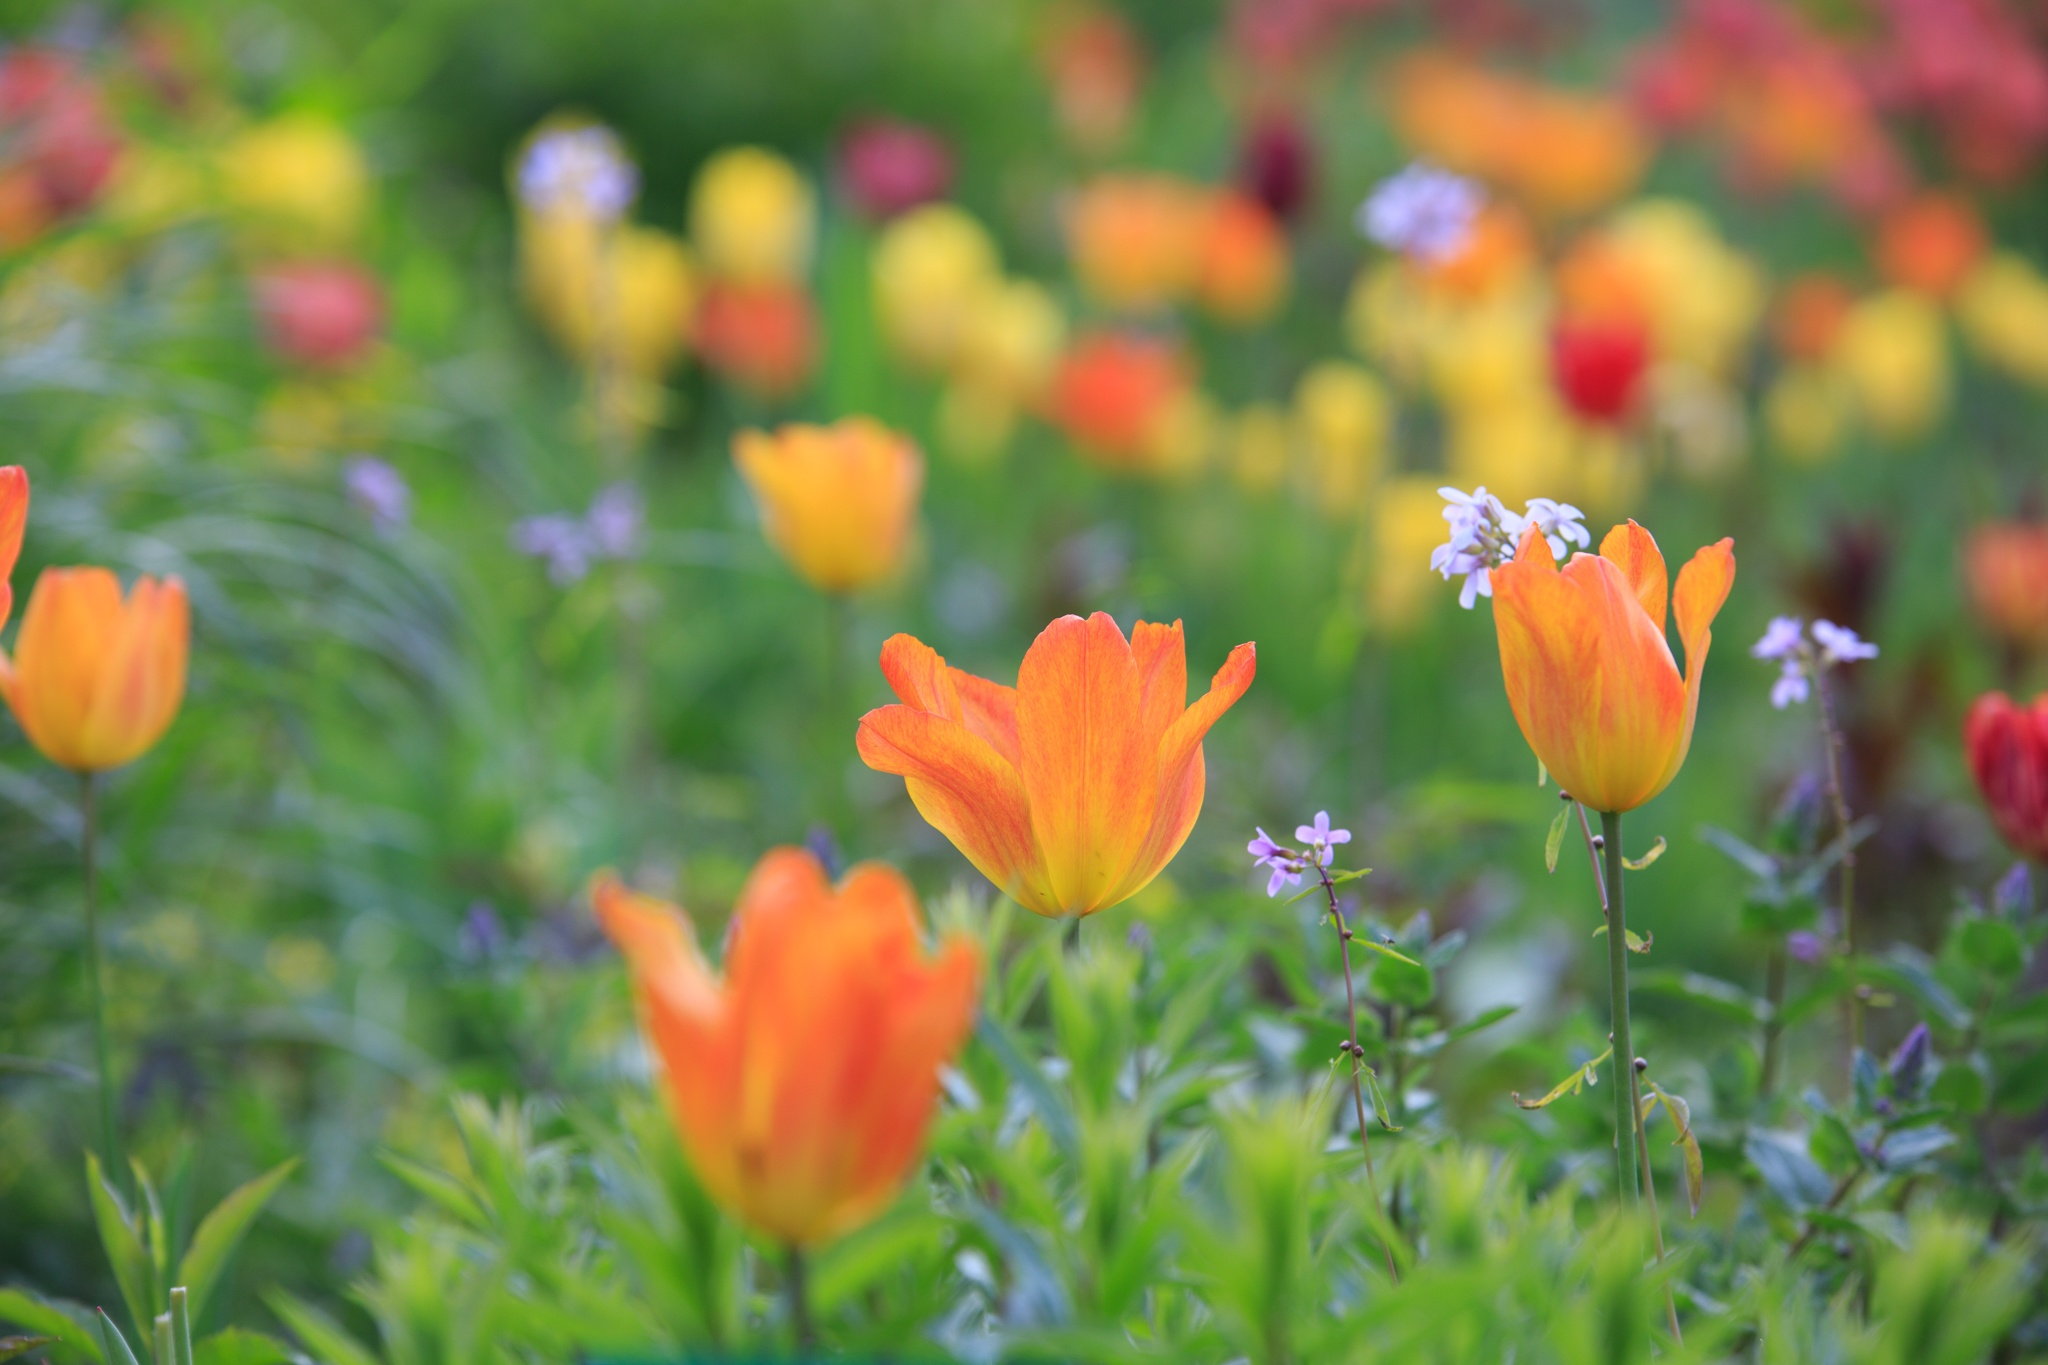 Tulipa fosteriana "Orange Emperor"